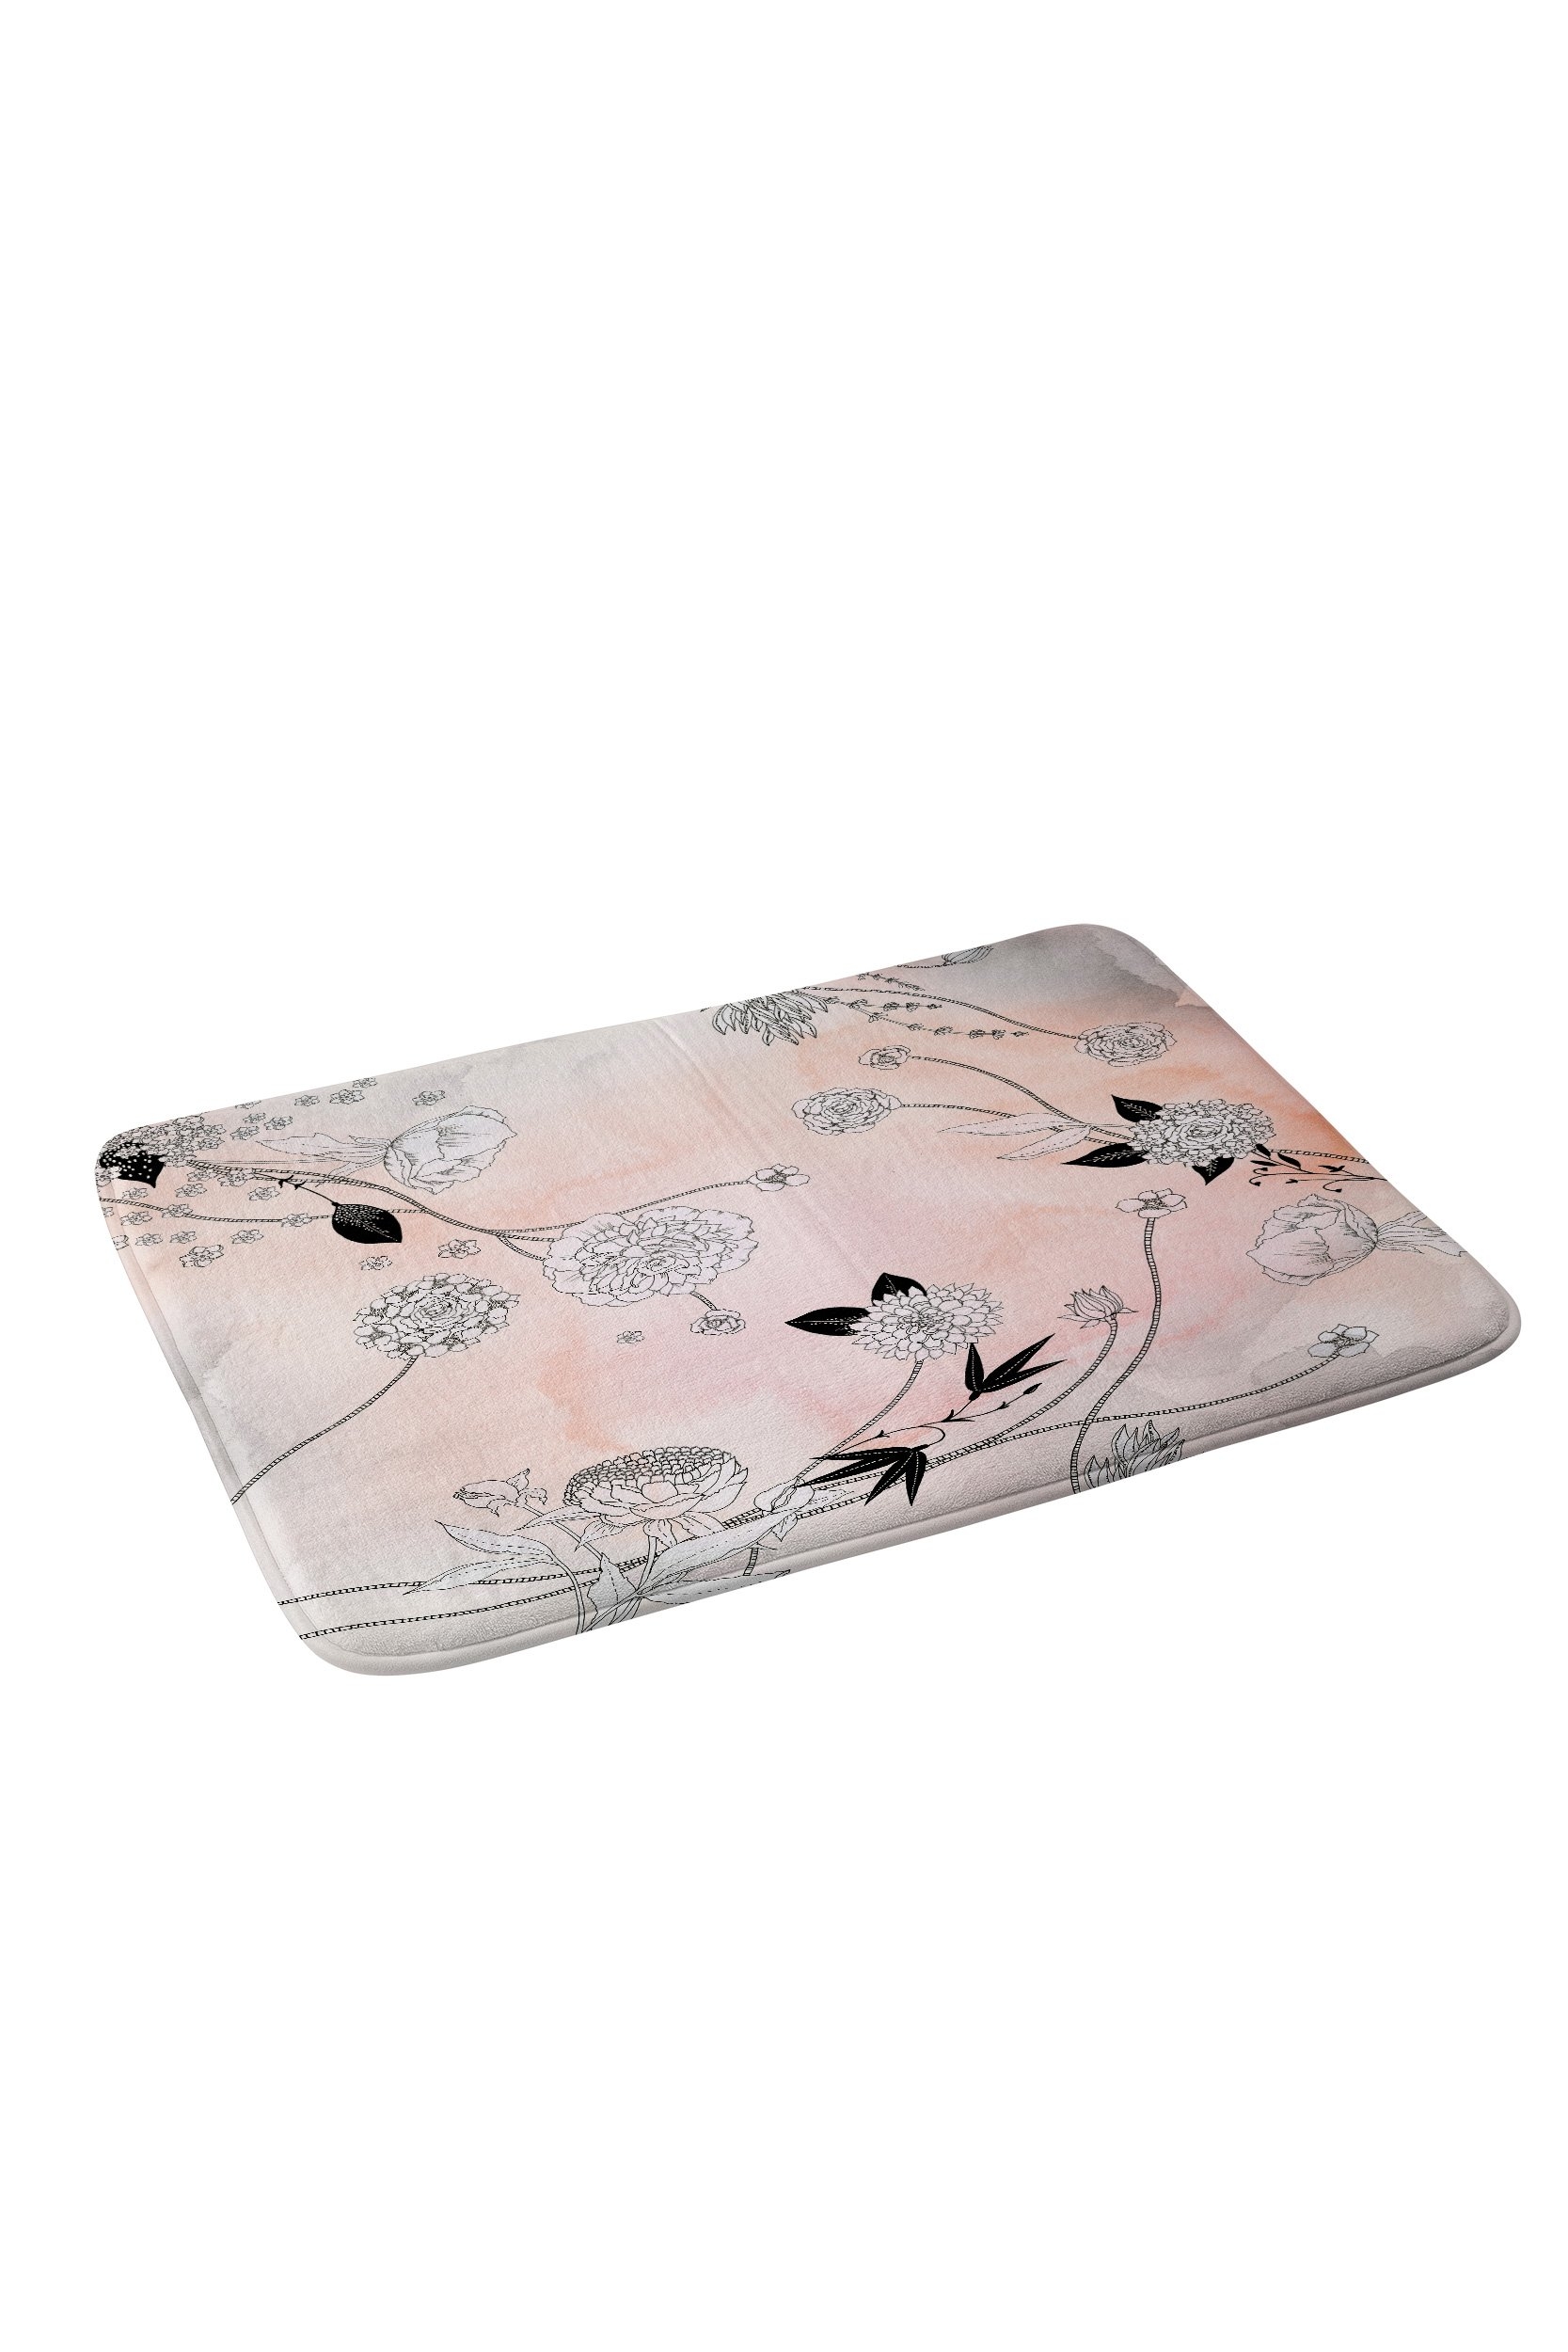 Iveta Abolina Coral Dust Memory Foam Bath Mat - 34" x 21" - Image 0